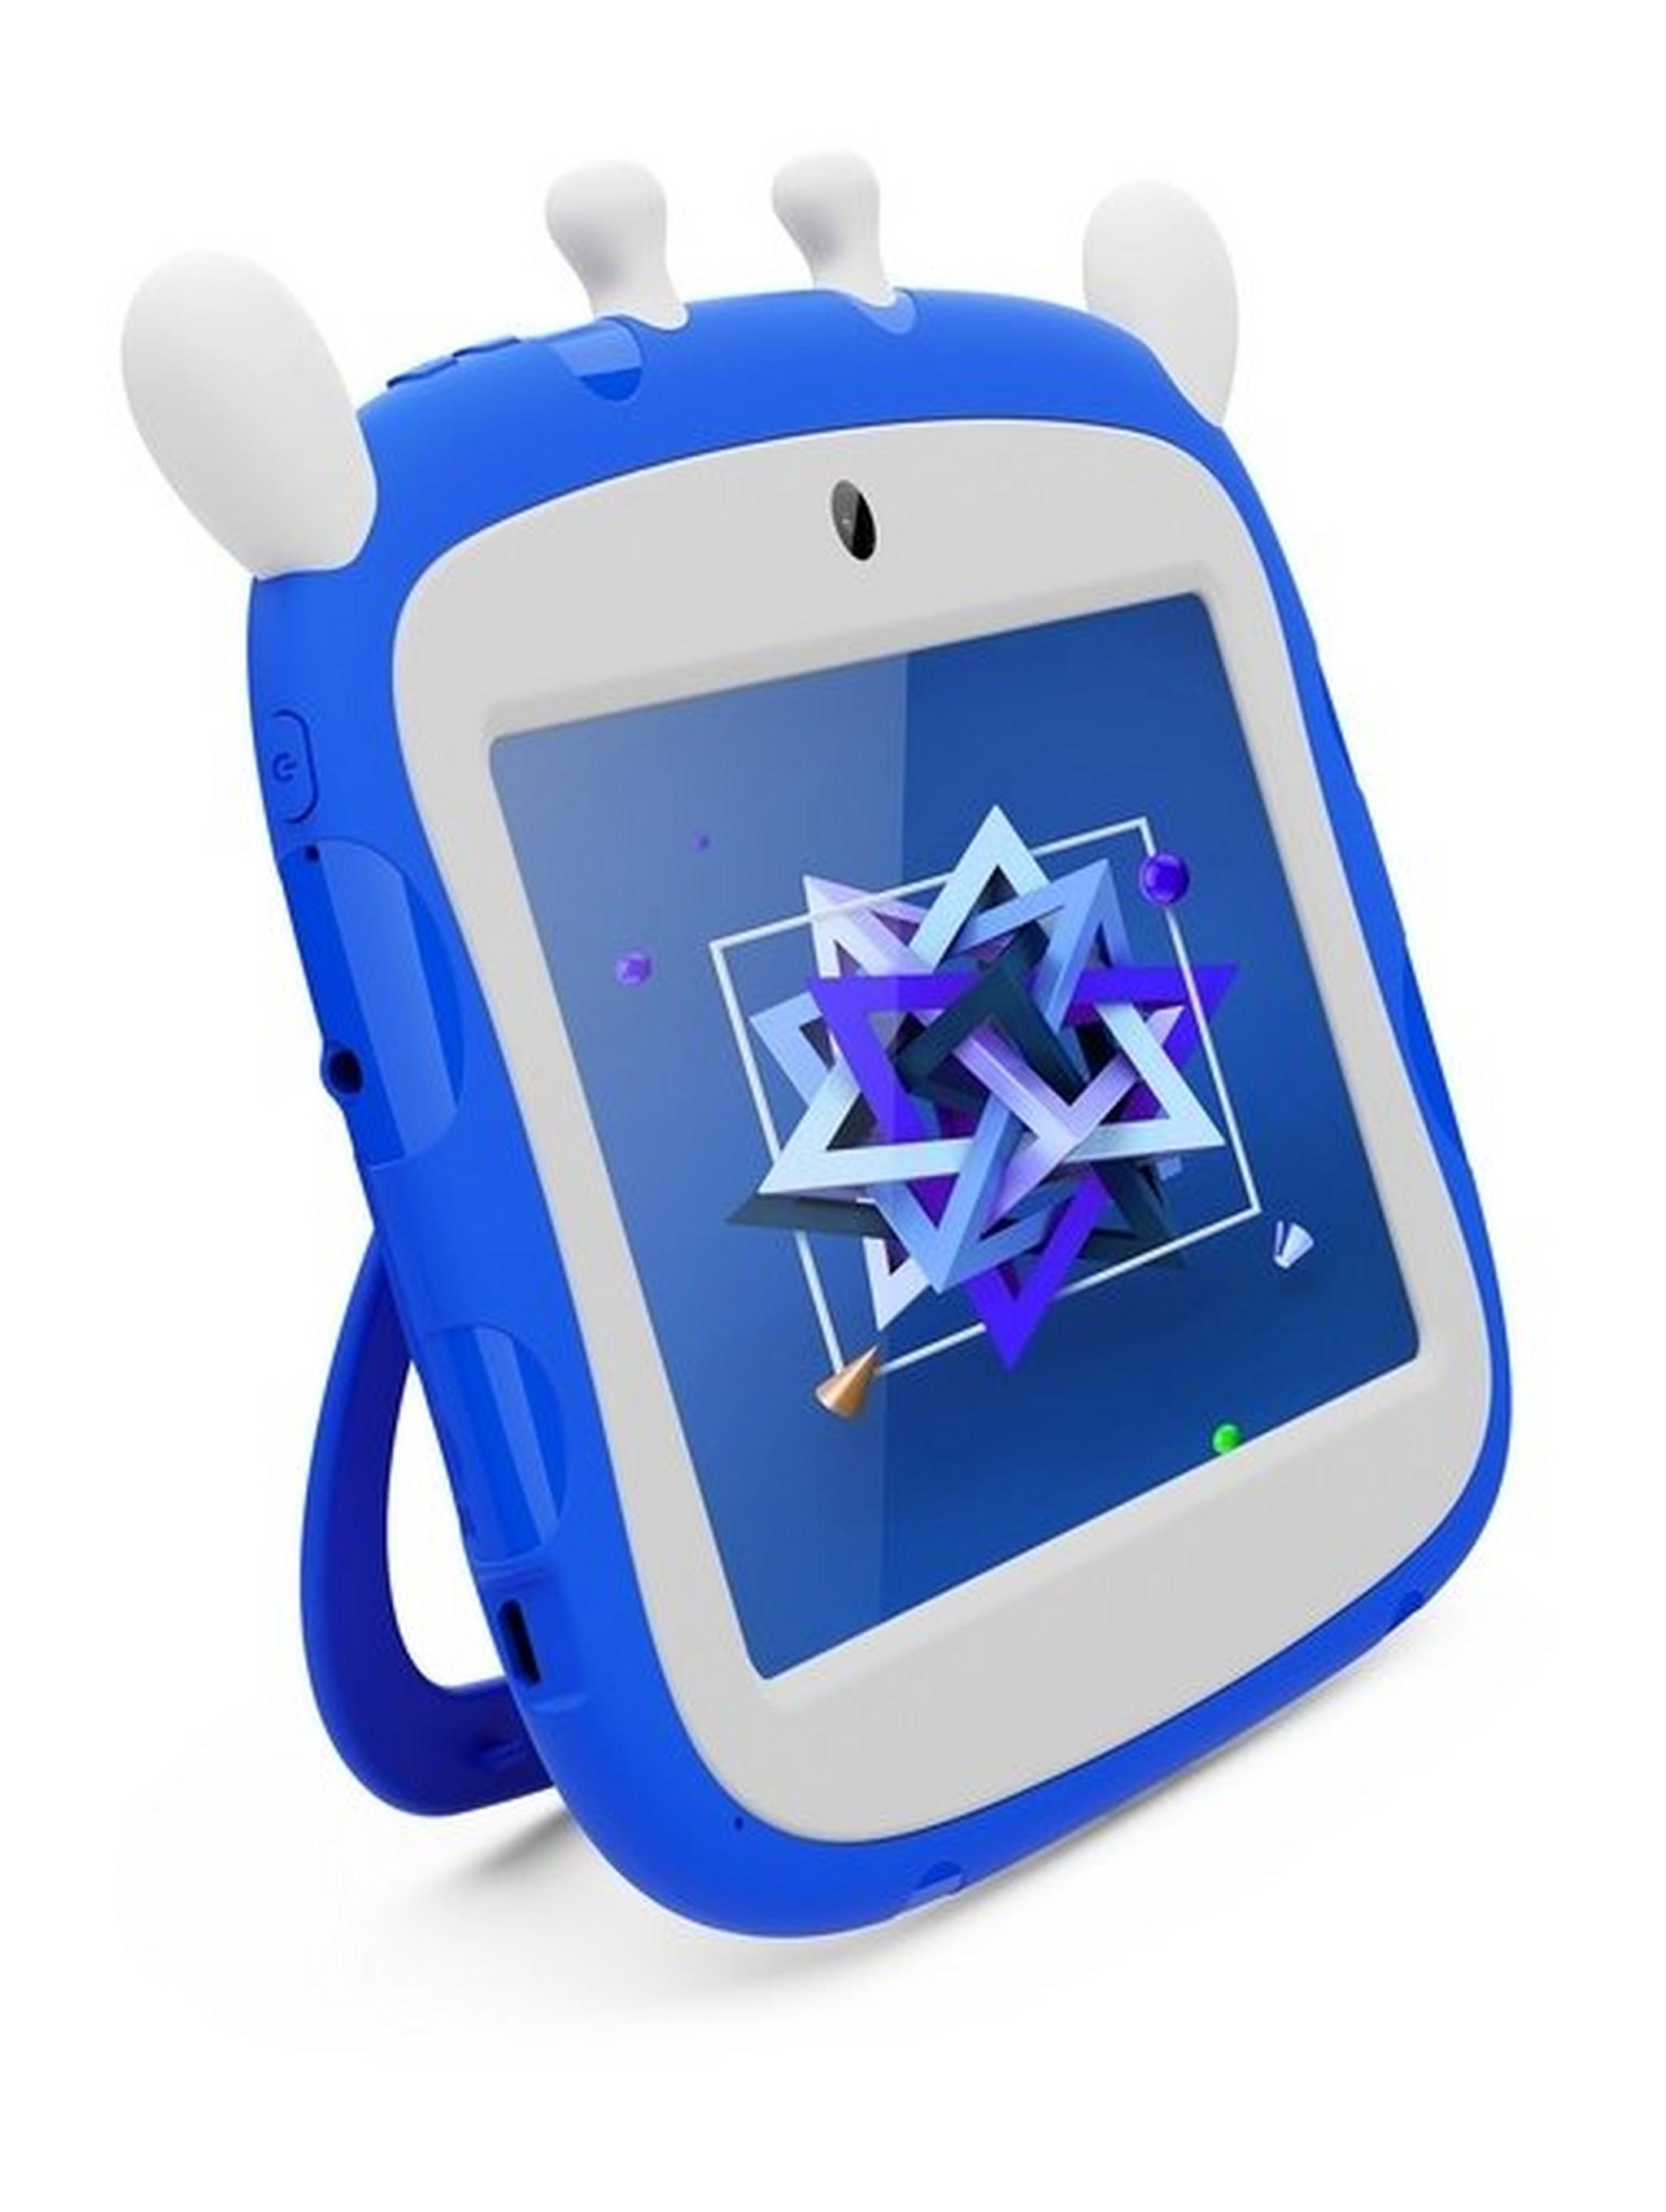 G-Tab Q2S 16GB 7-inch Kids Wifi Tablet - Blue